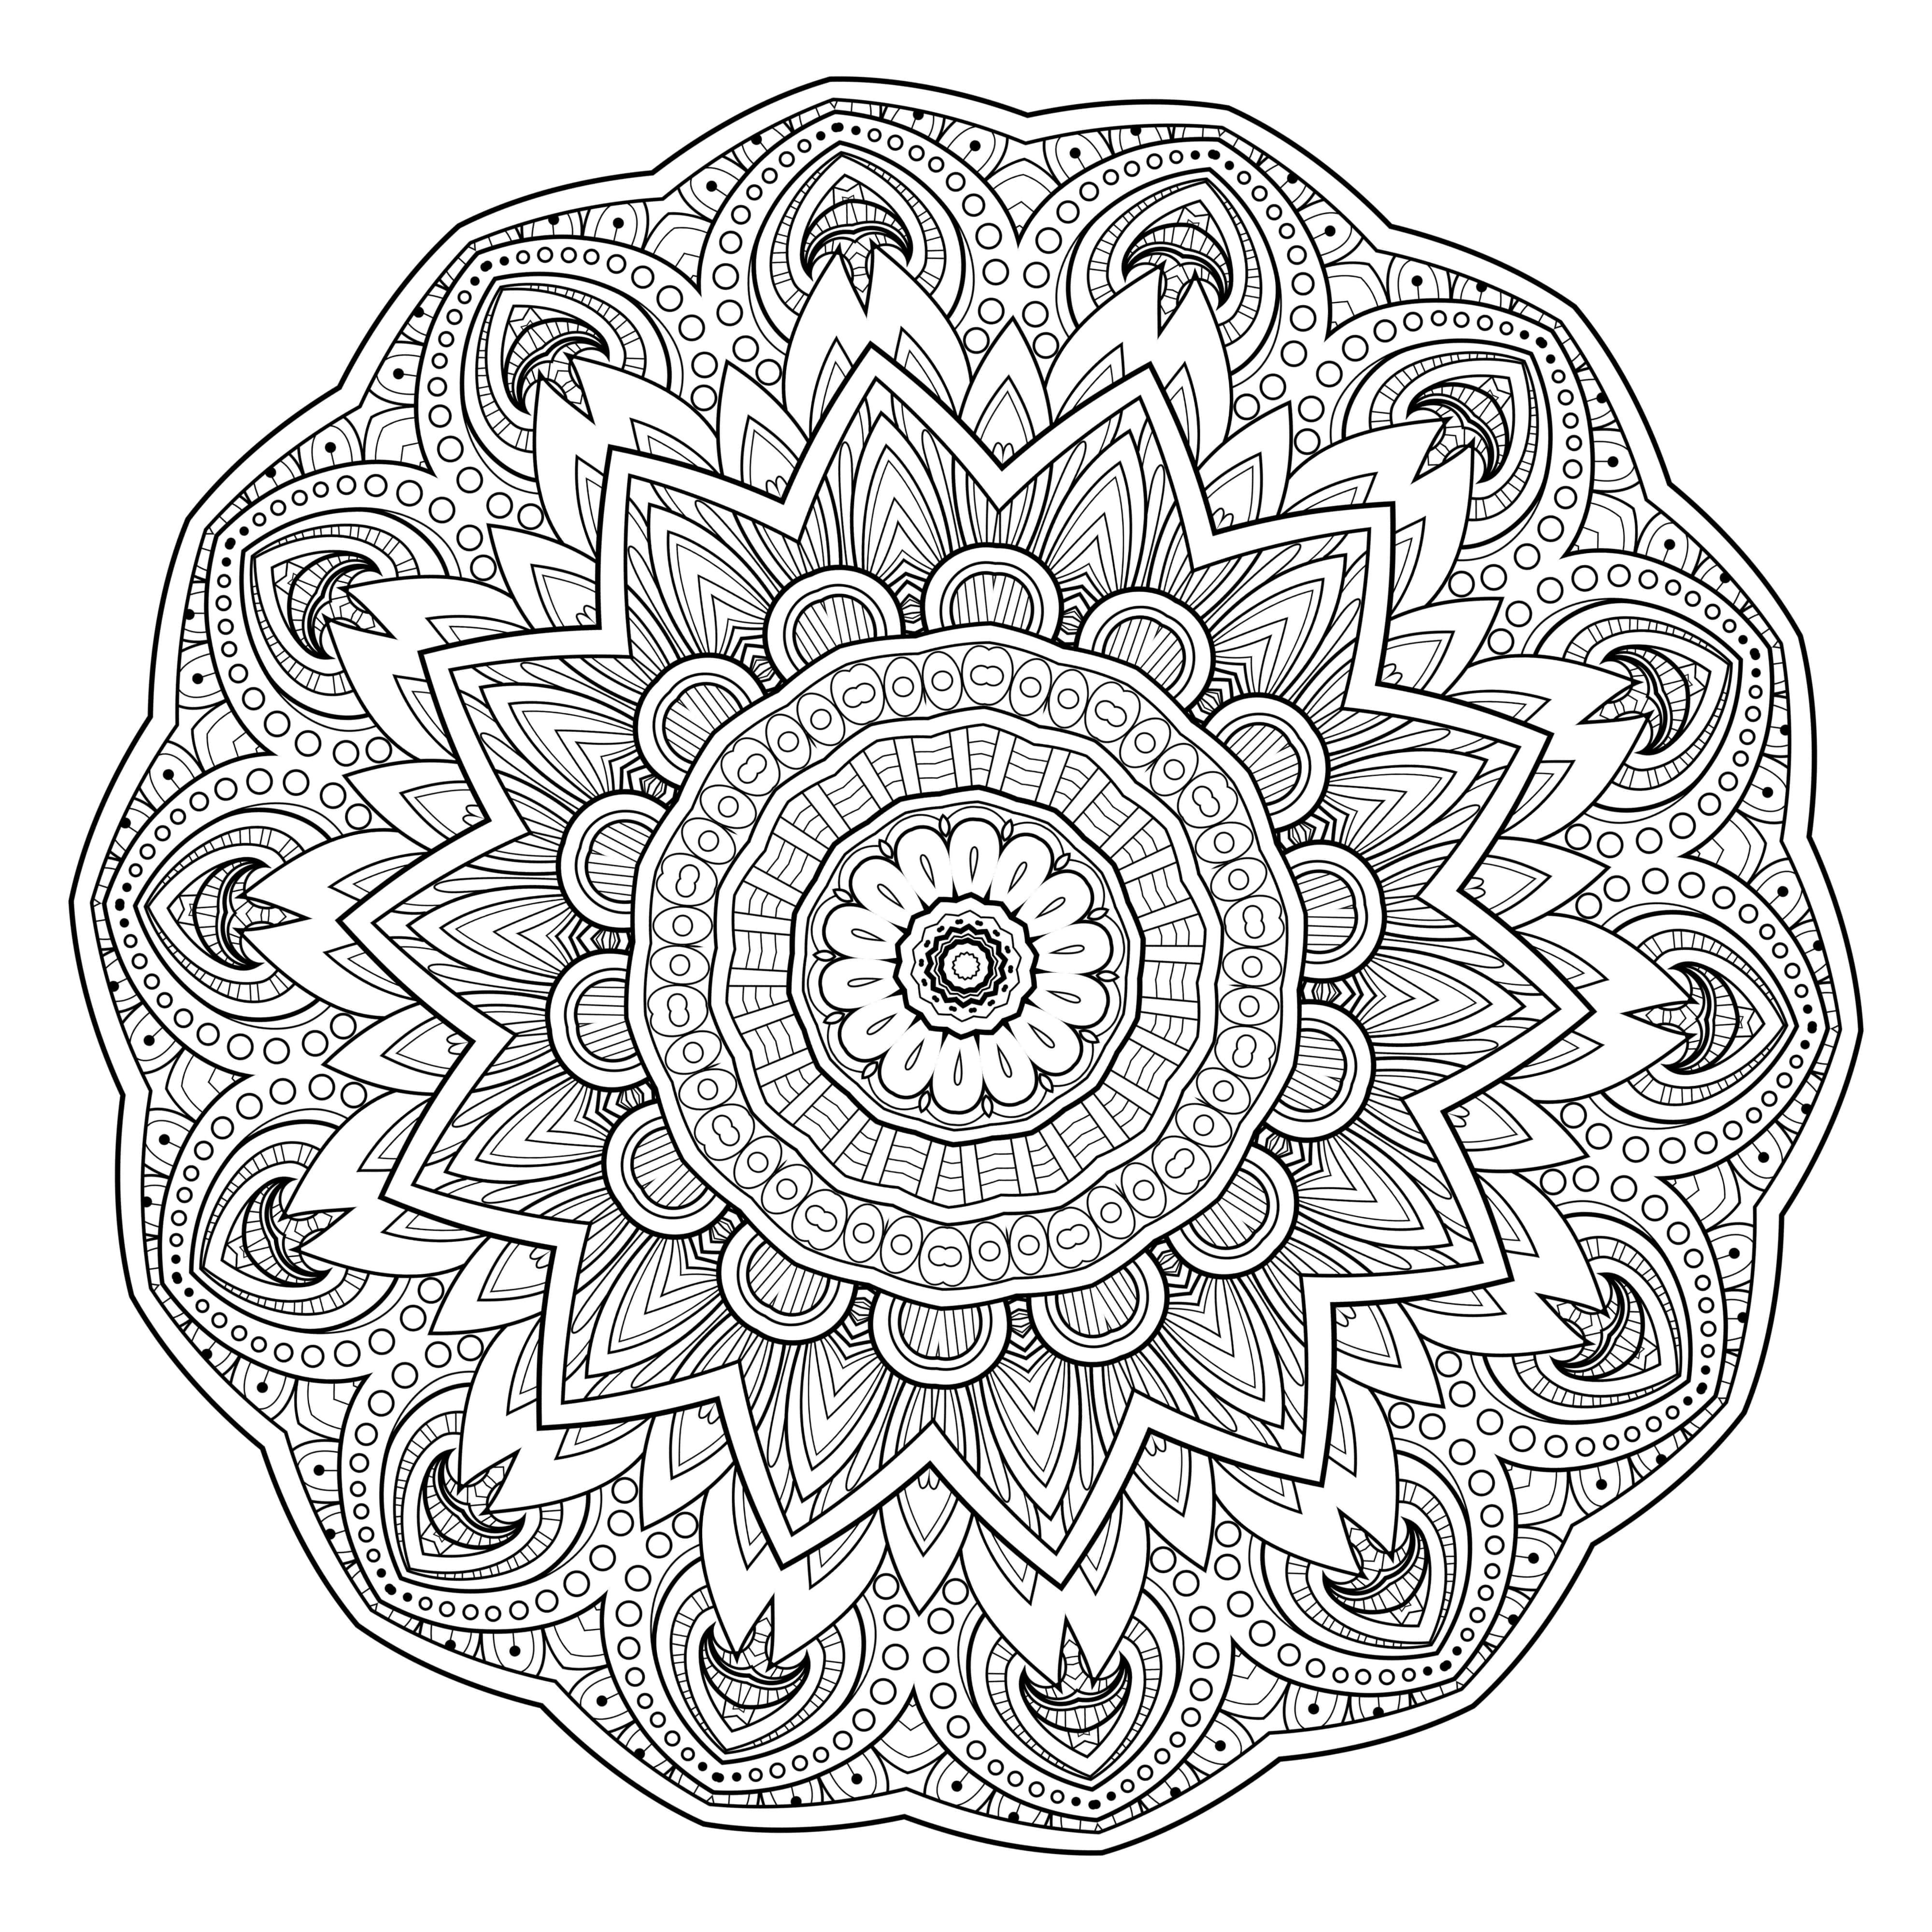 5 Free Printable Coloring Pages: Mandala Templates - Free Printable Mandalas